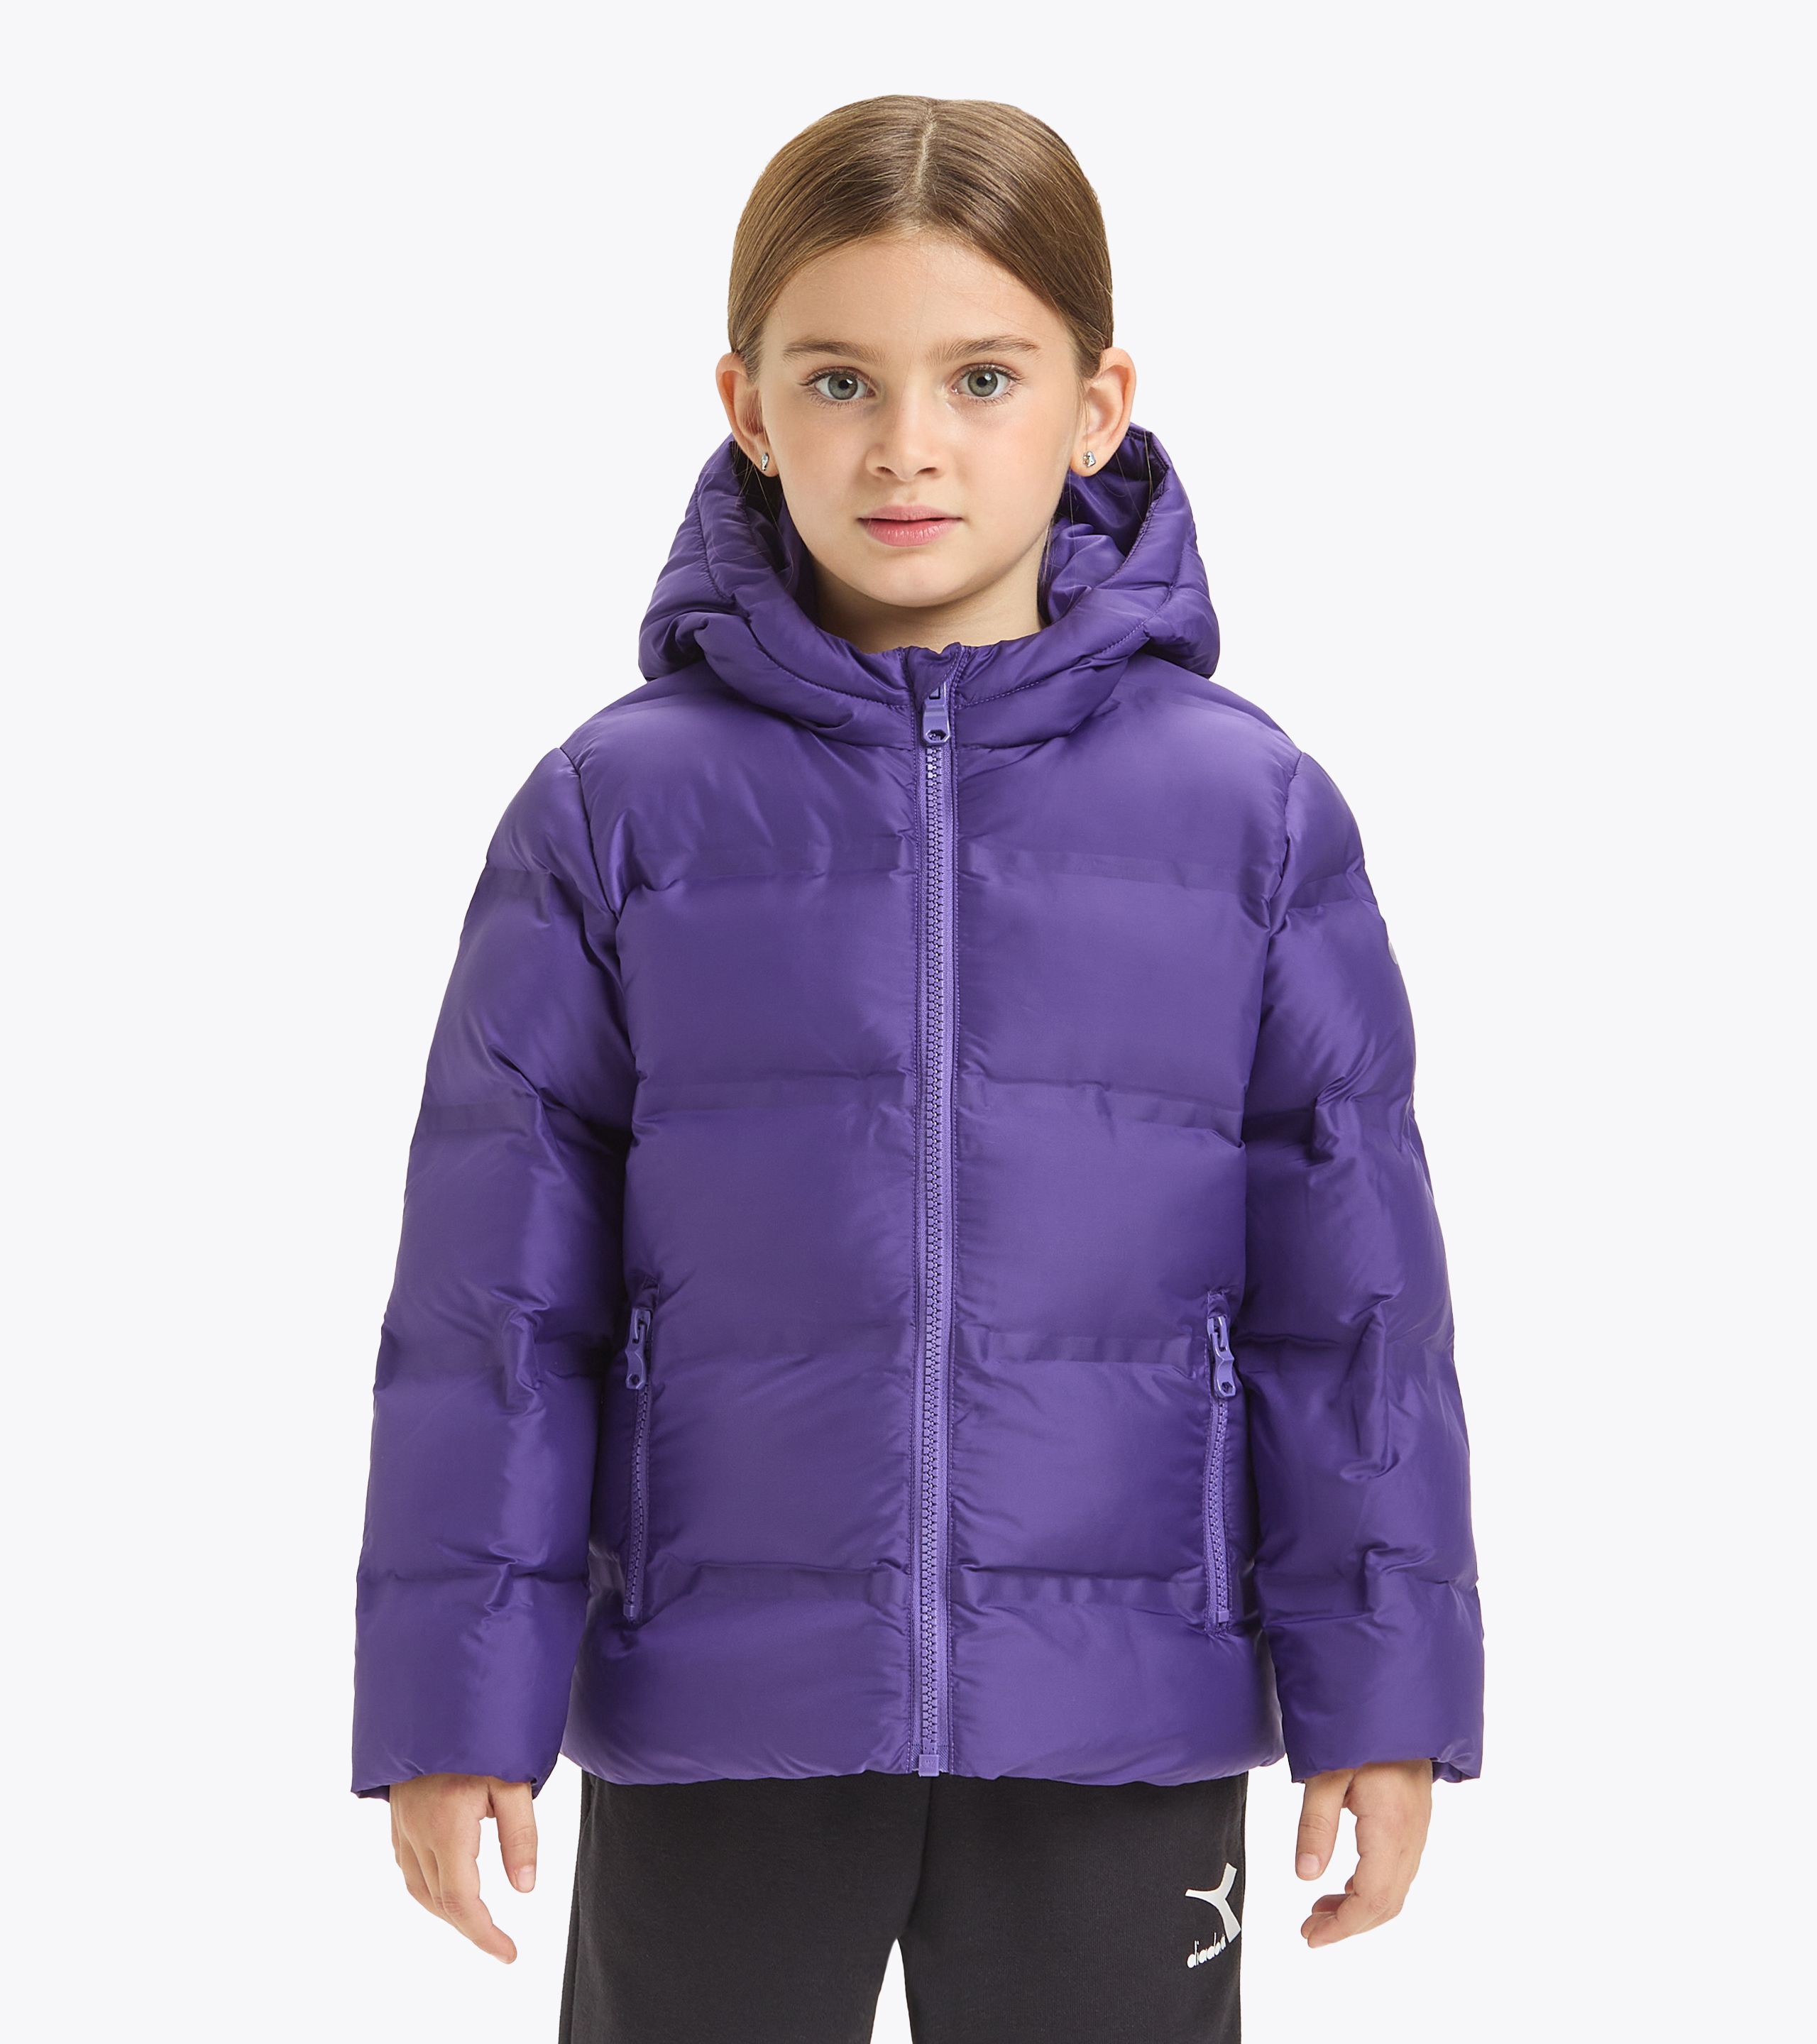 Magellan Outdoors Hot Pink Full Zip Lined Hooded Rain Jacket Girls Size XL  16 | Girls jacket, Hooded rain jacket, Size girls